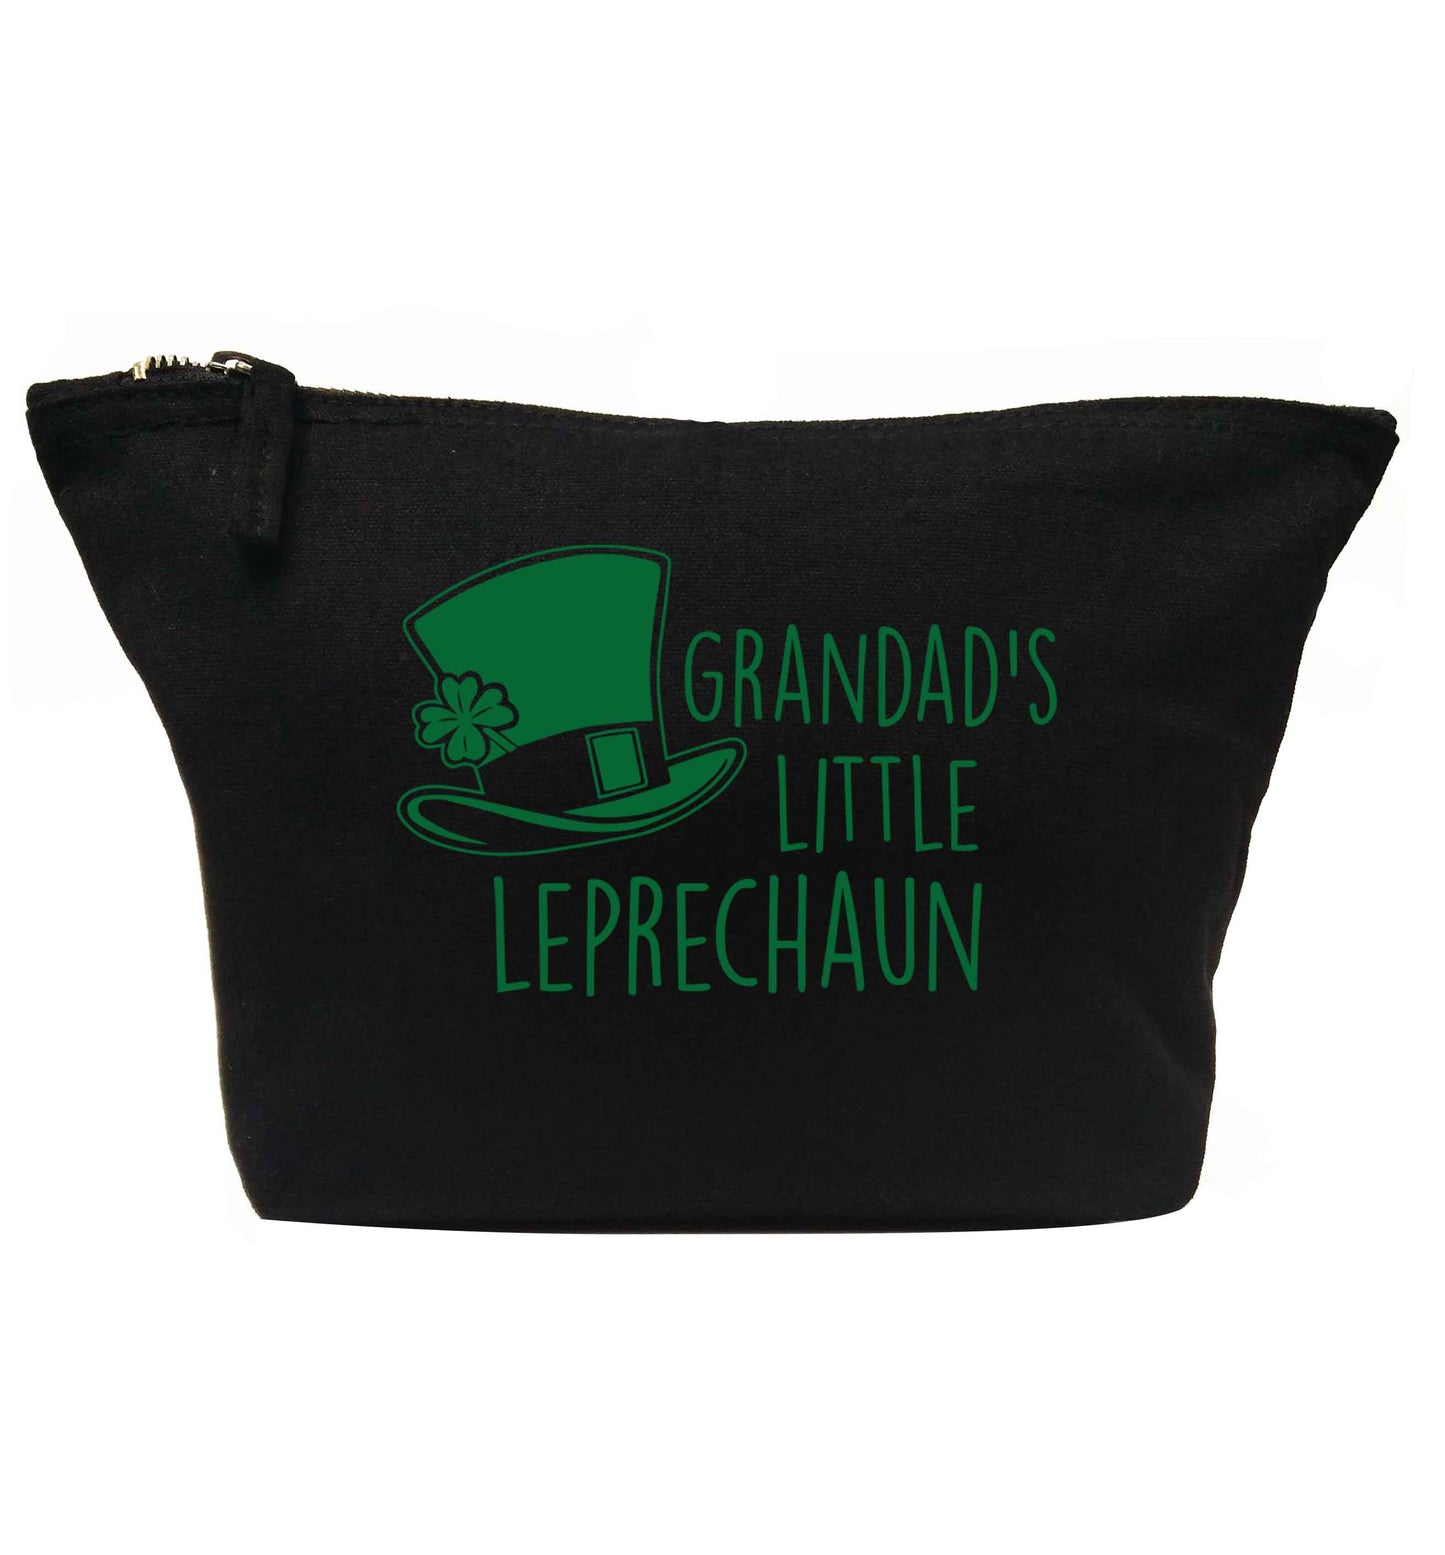 Grandad's little leprechaun | Makeup / wash bag